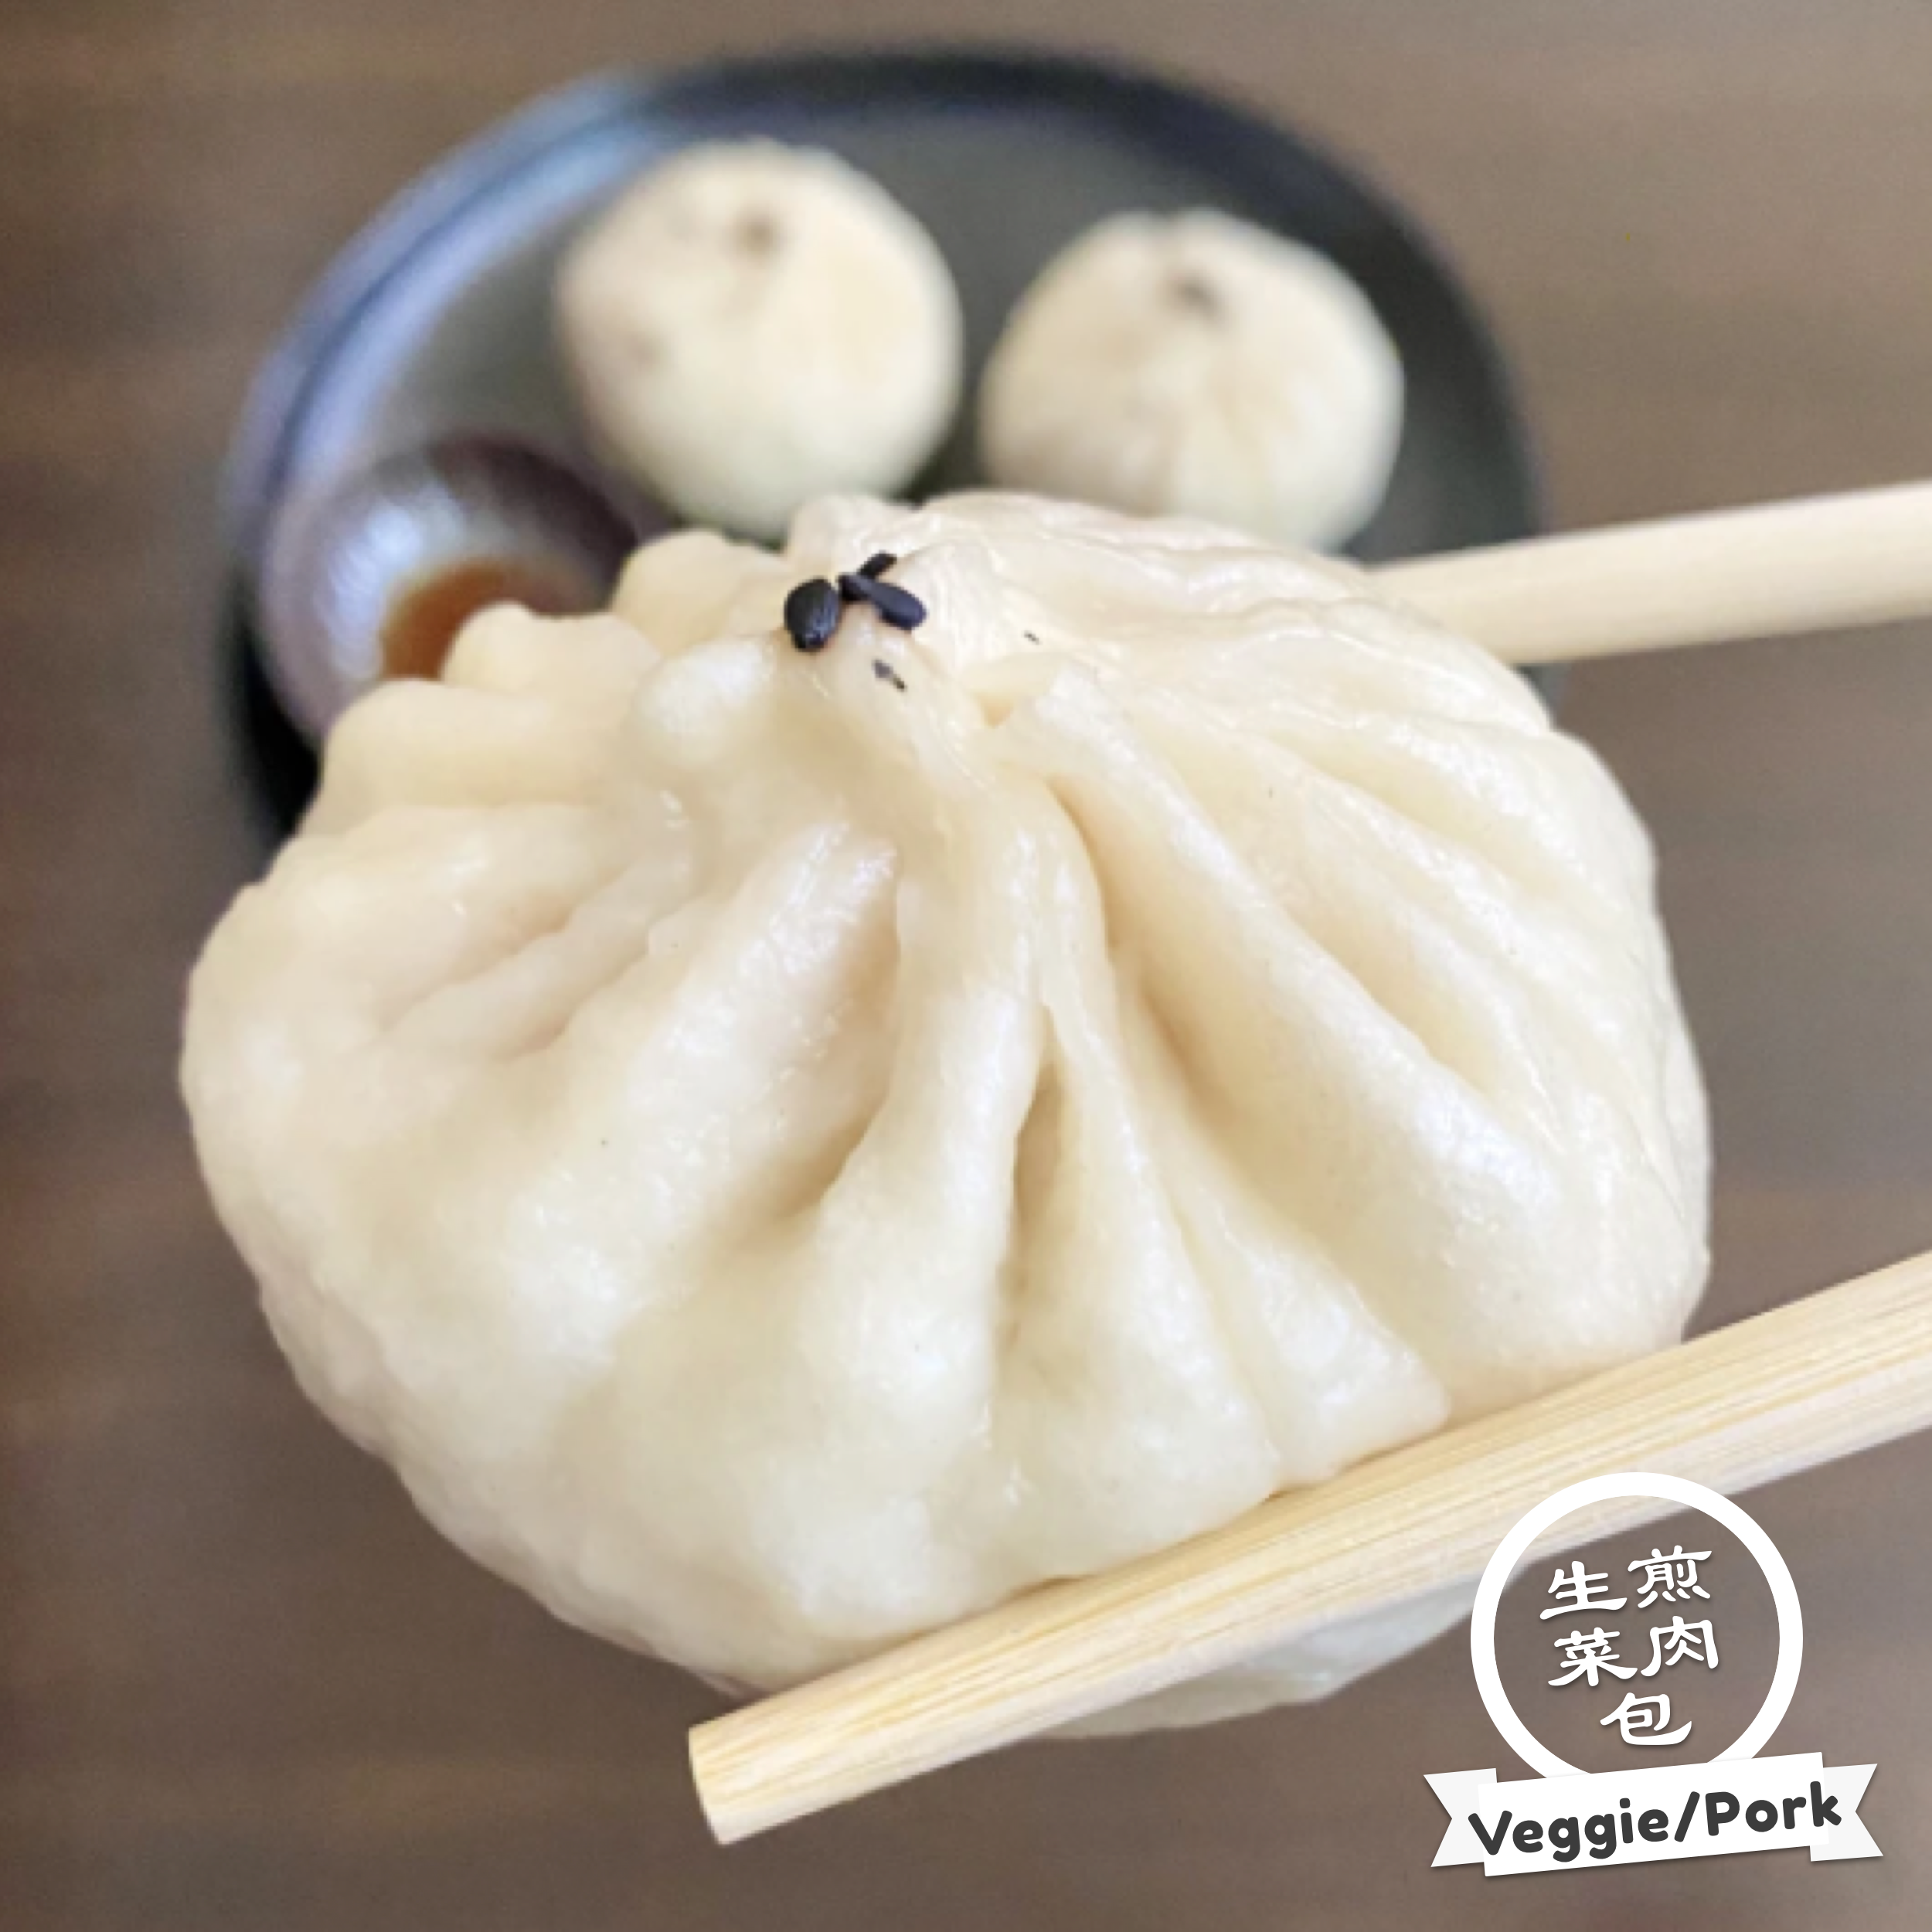 Pan Fried Bao (Veggie/Pork) - Yummi Dumplings